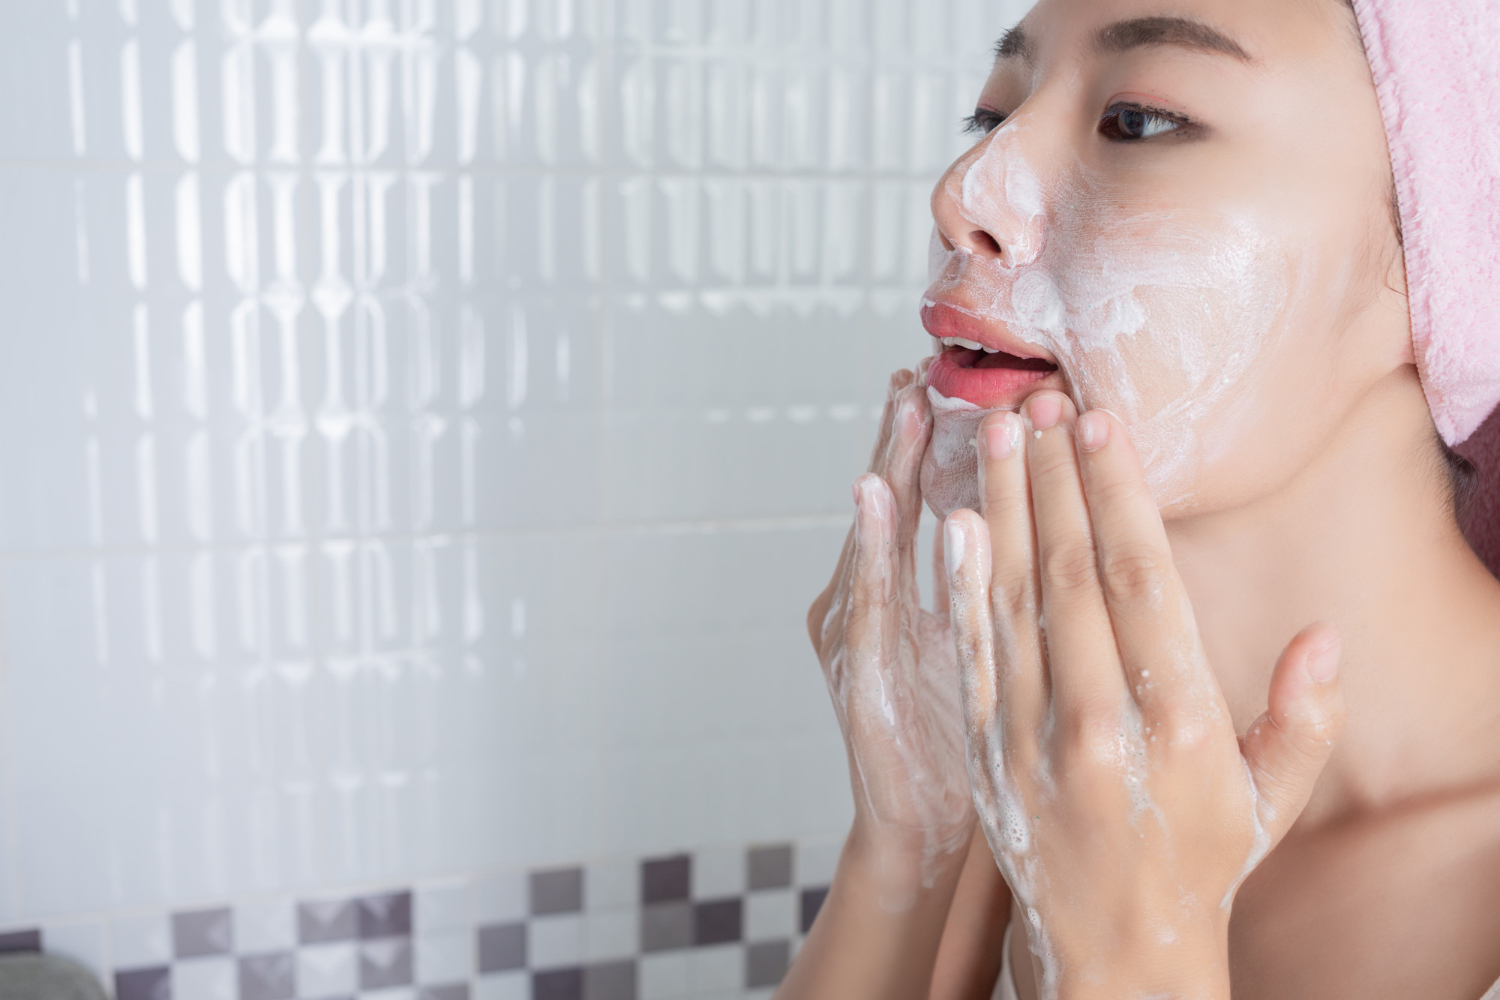 tips cuci muka untuk kulit berminyak